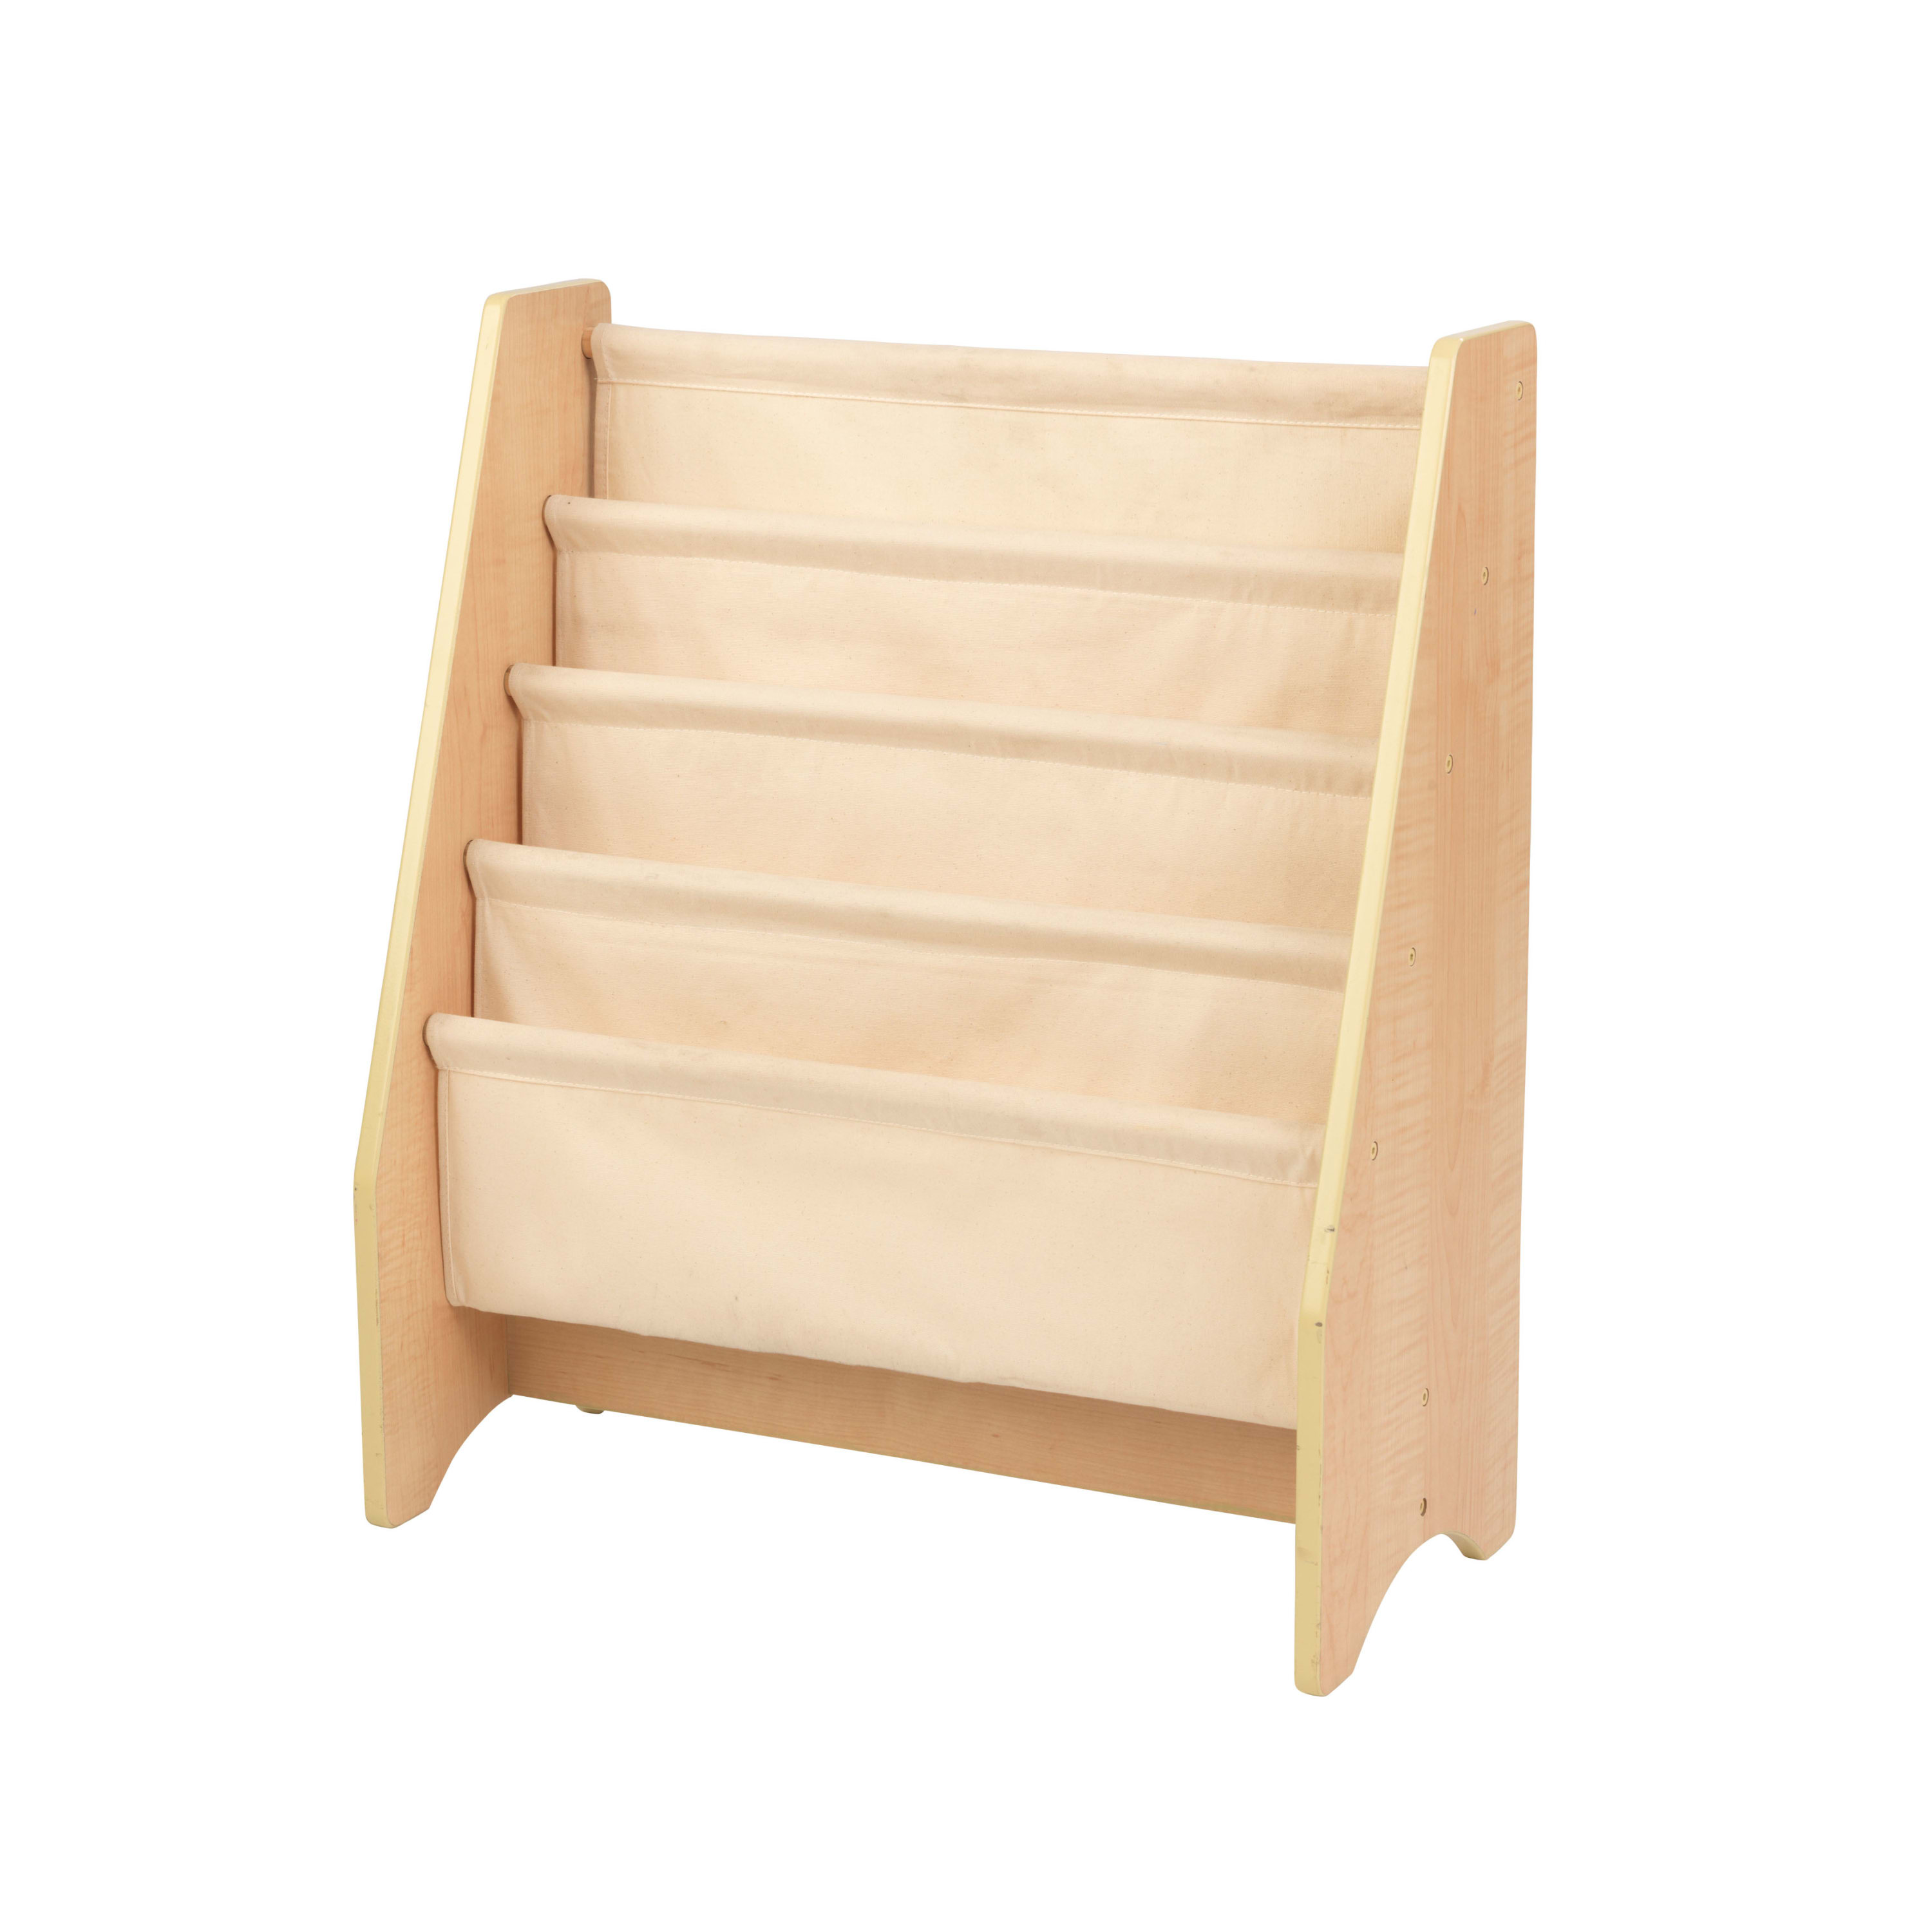 KidKraft Wood and Canvas Sling Bookshelf Furniture for Kids – Natural - image 1 of 7